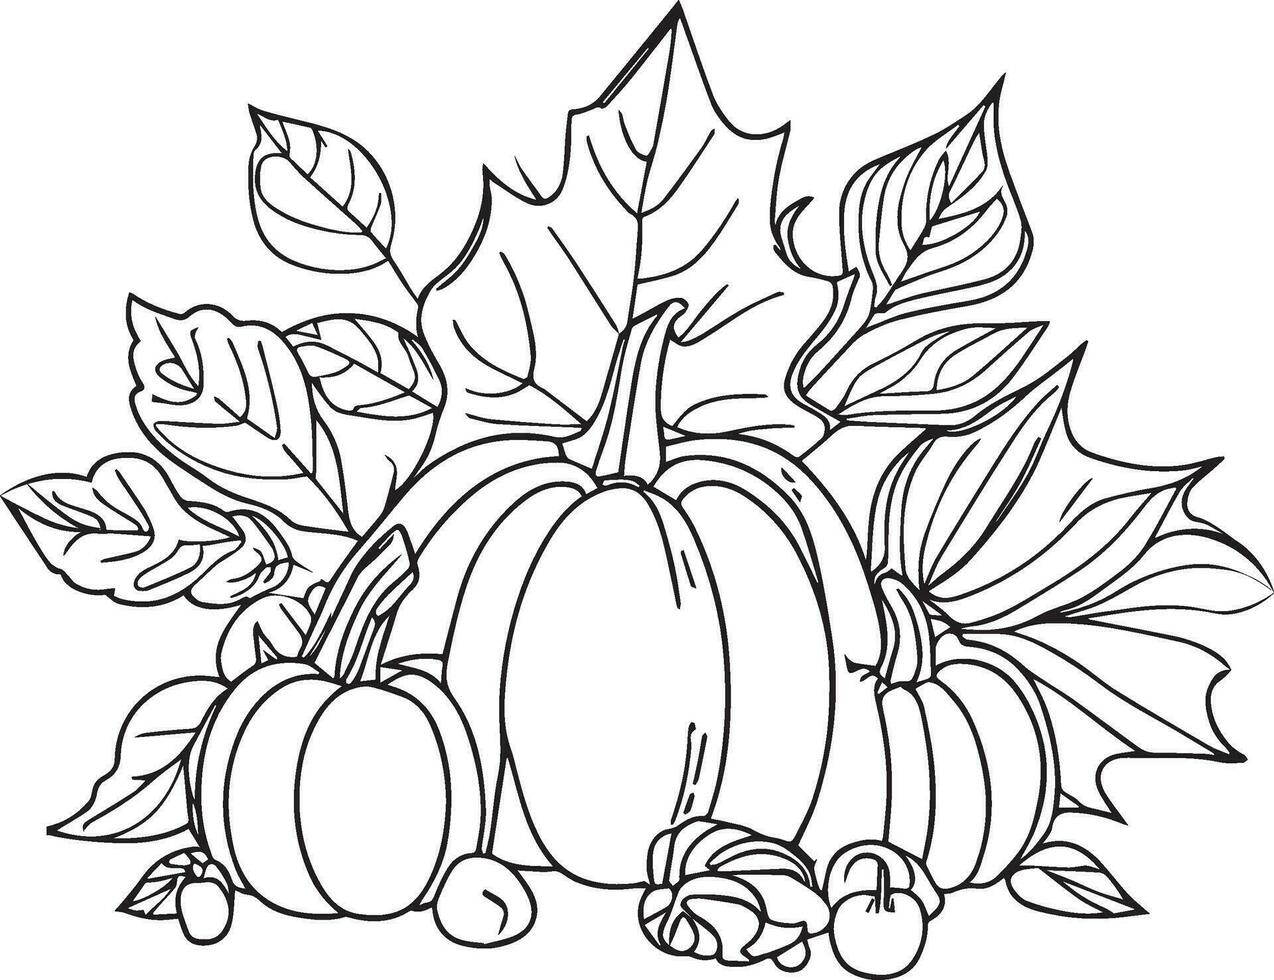 Autumn leaf coloring pages for children, Thanksgiving celebration line drawing, leaf pumpkin line art, September fall leaves illustrations coloring pages vector